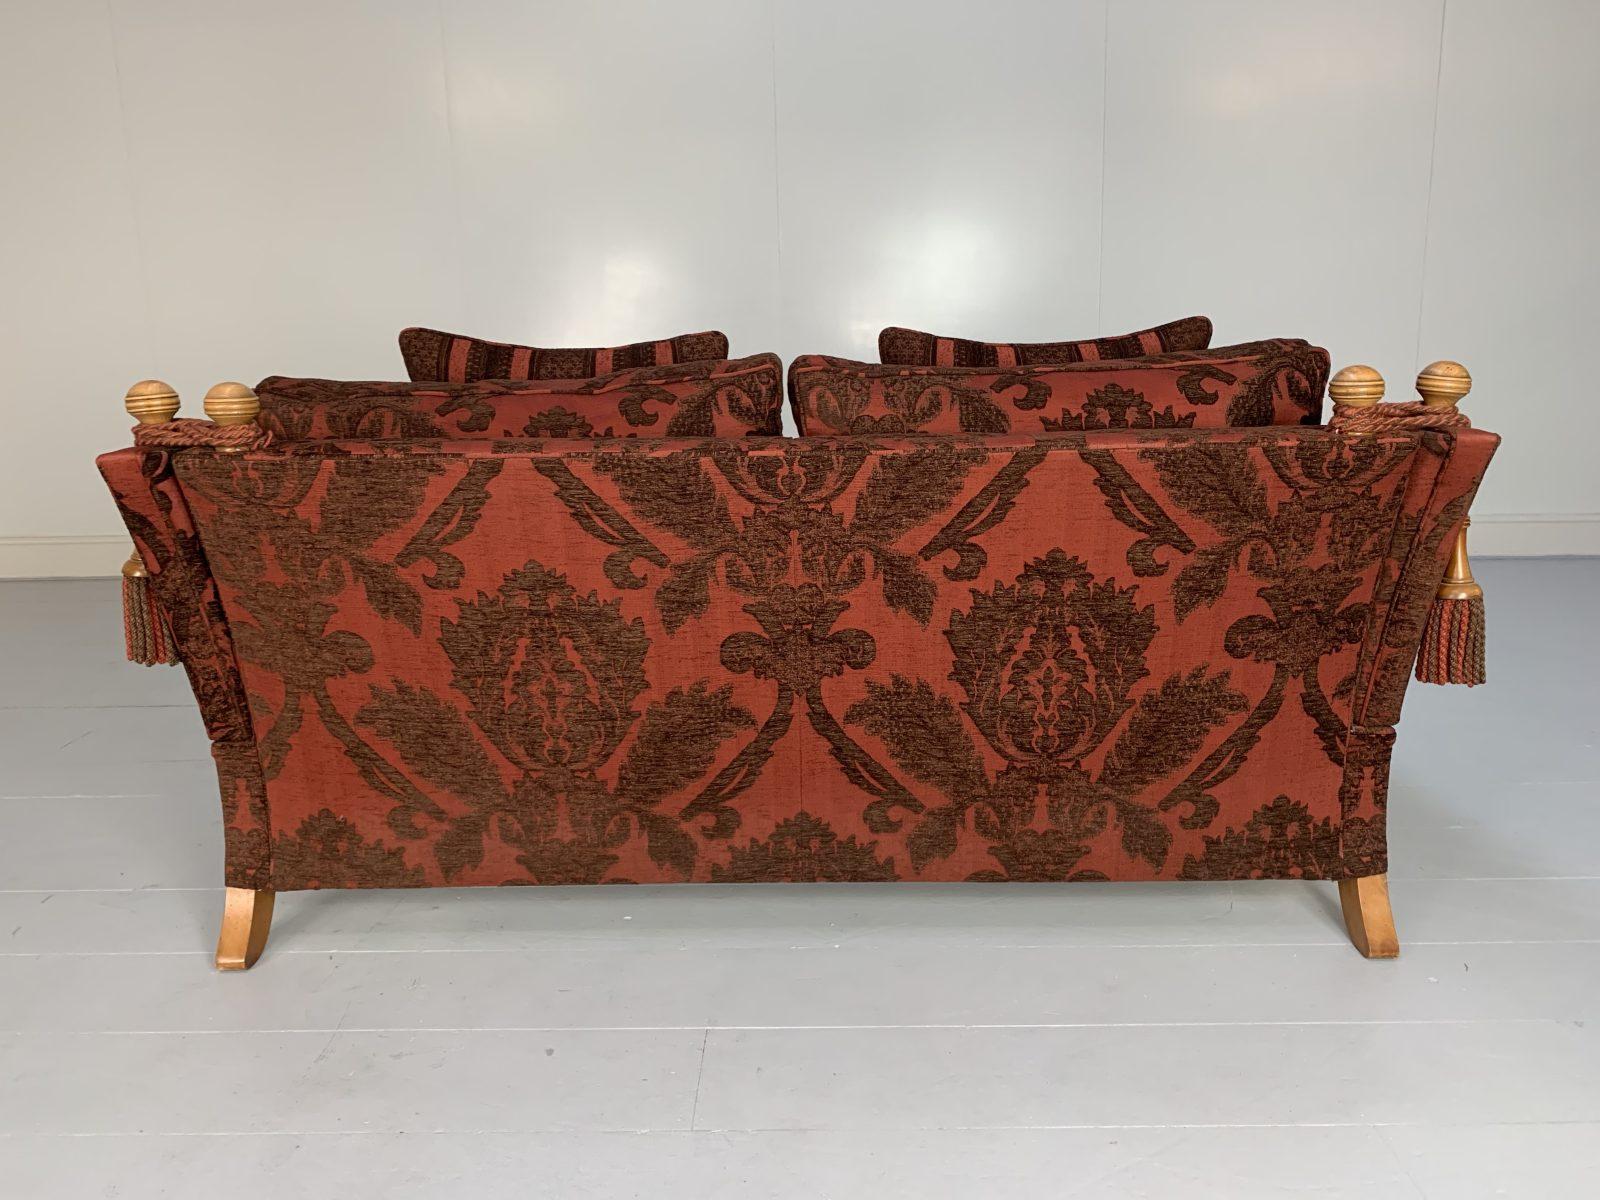 Duresta “Trafalgar” Sofa & “Devonshire” Armchair, in Deep Red Damask For Sale 1